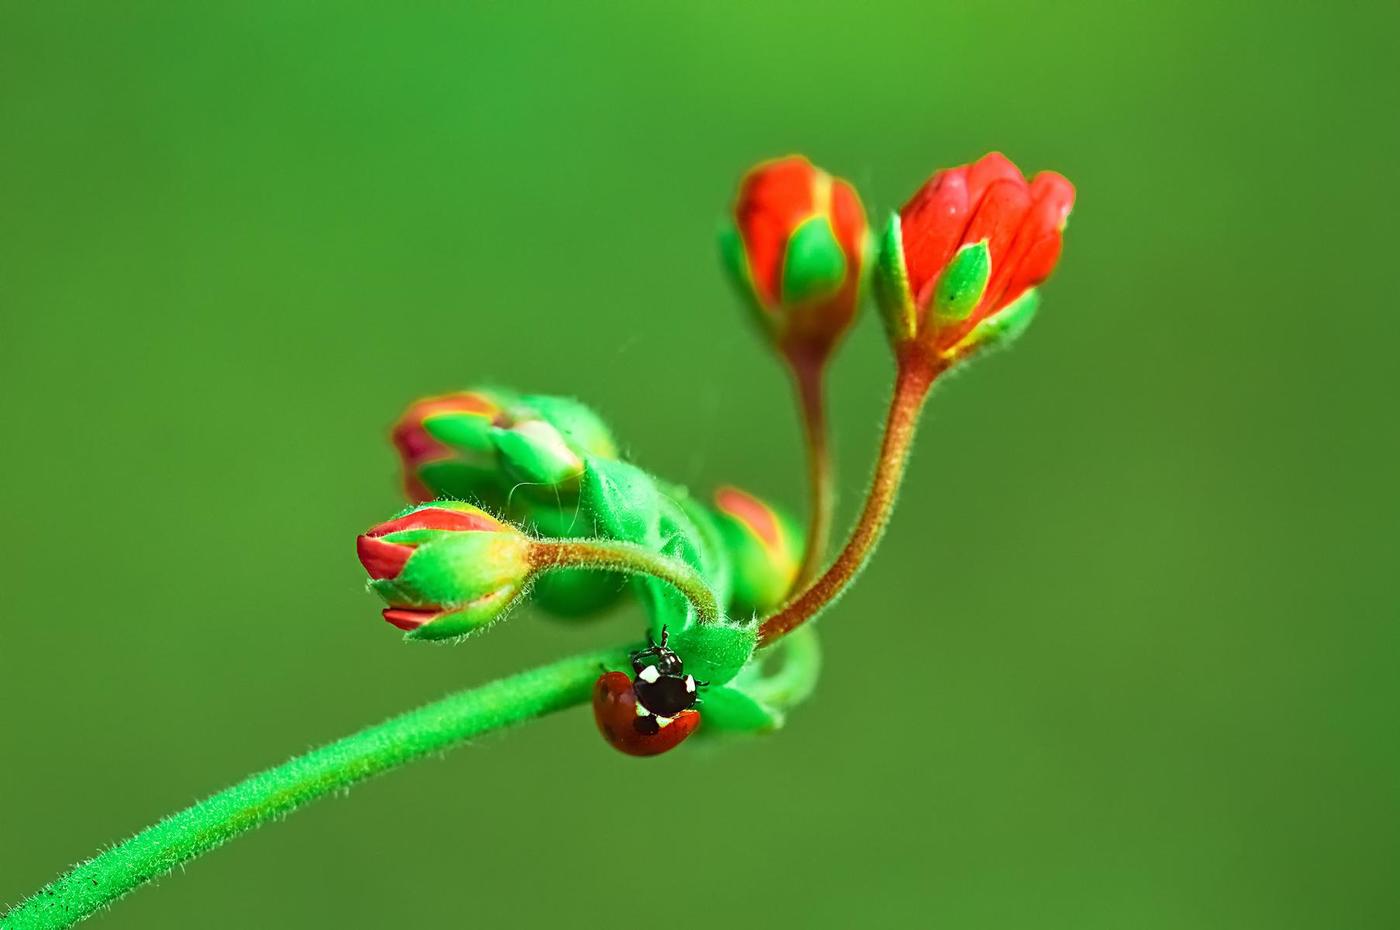 Ladybug on red flower